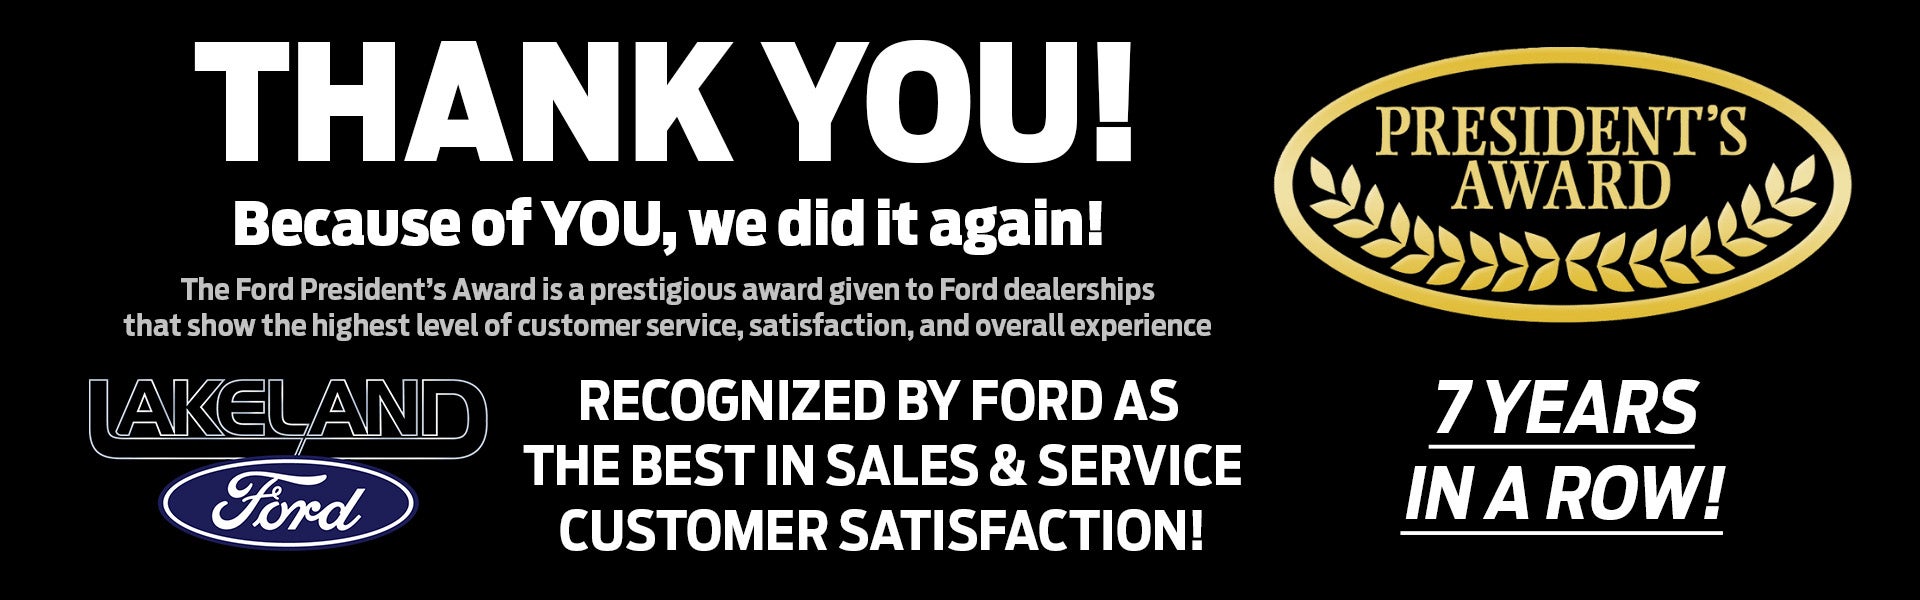 7th time winner of the Ford President's Award